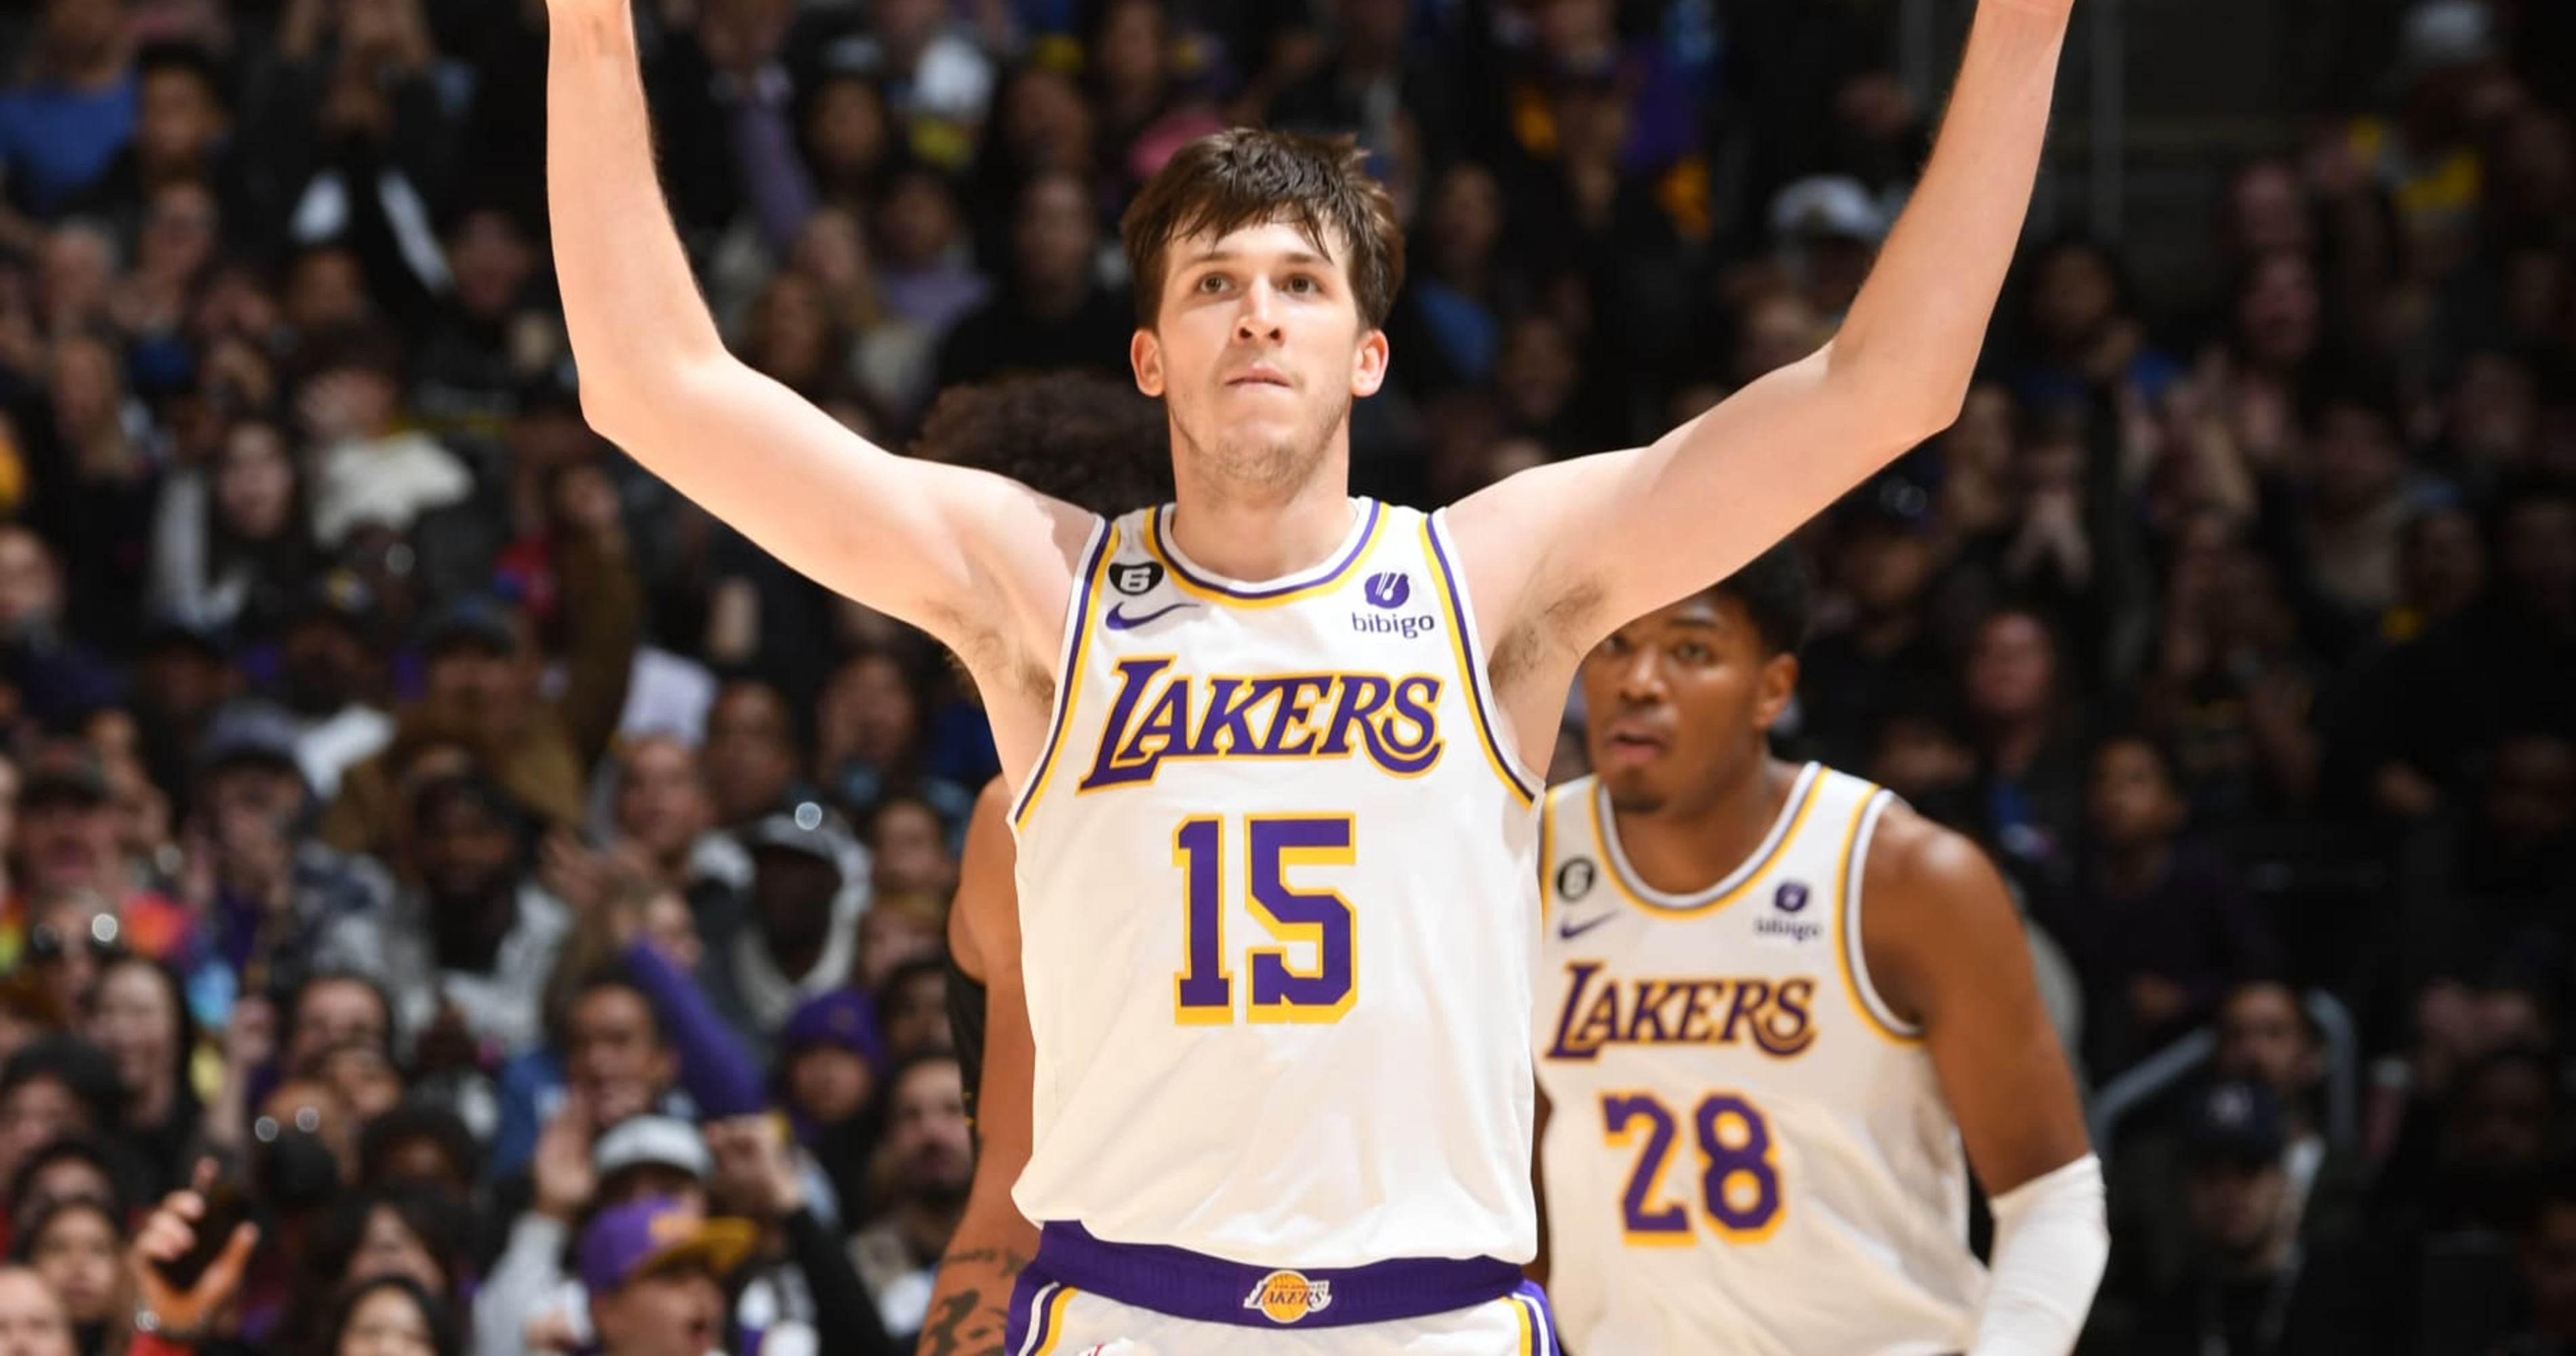 Lakers vs Suns scores & predictions